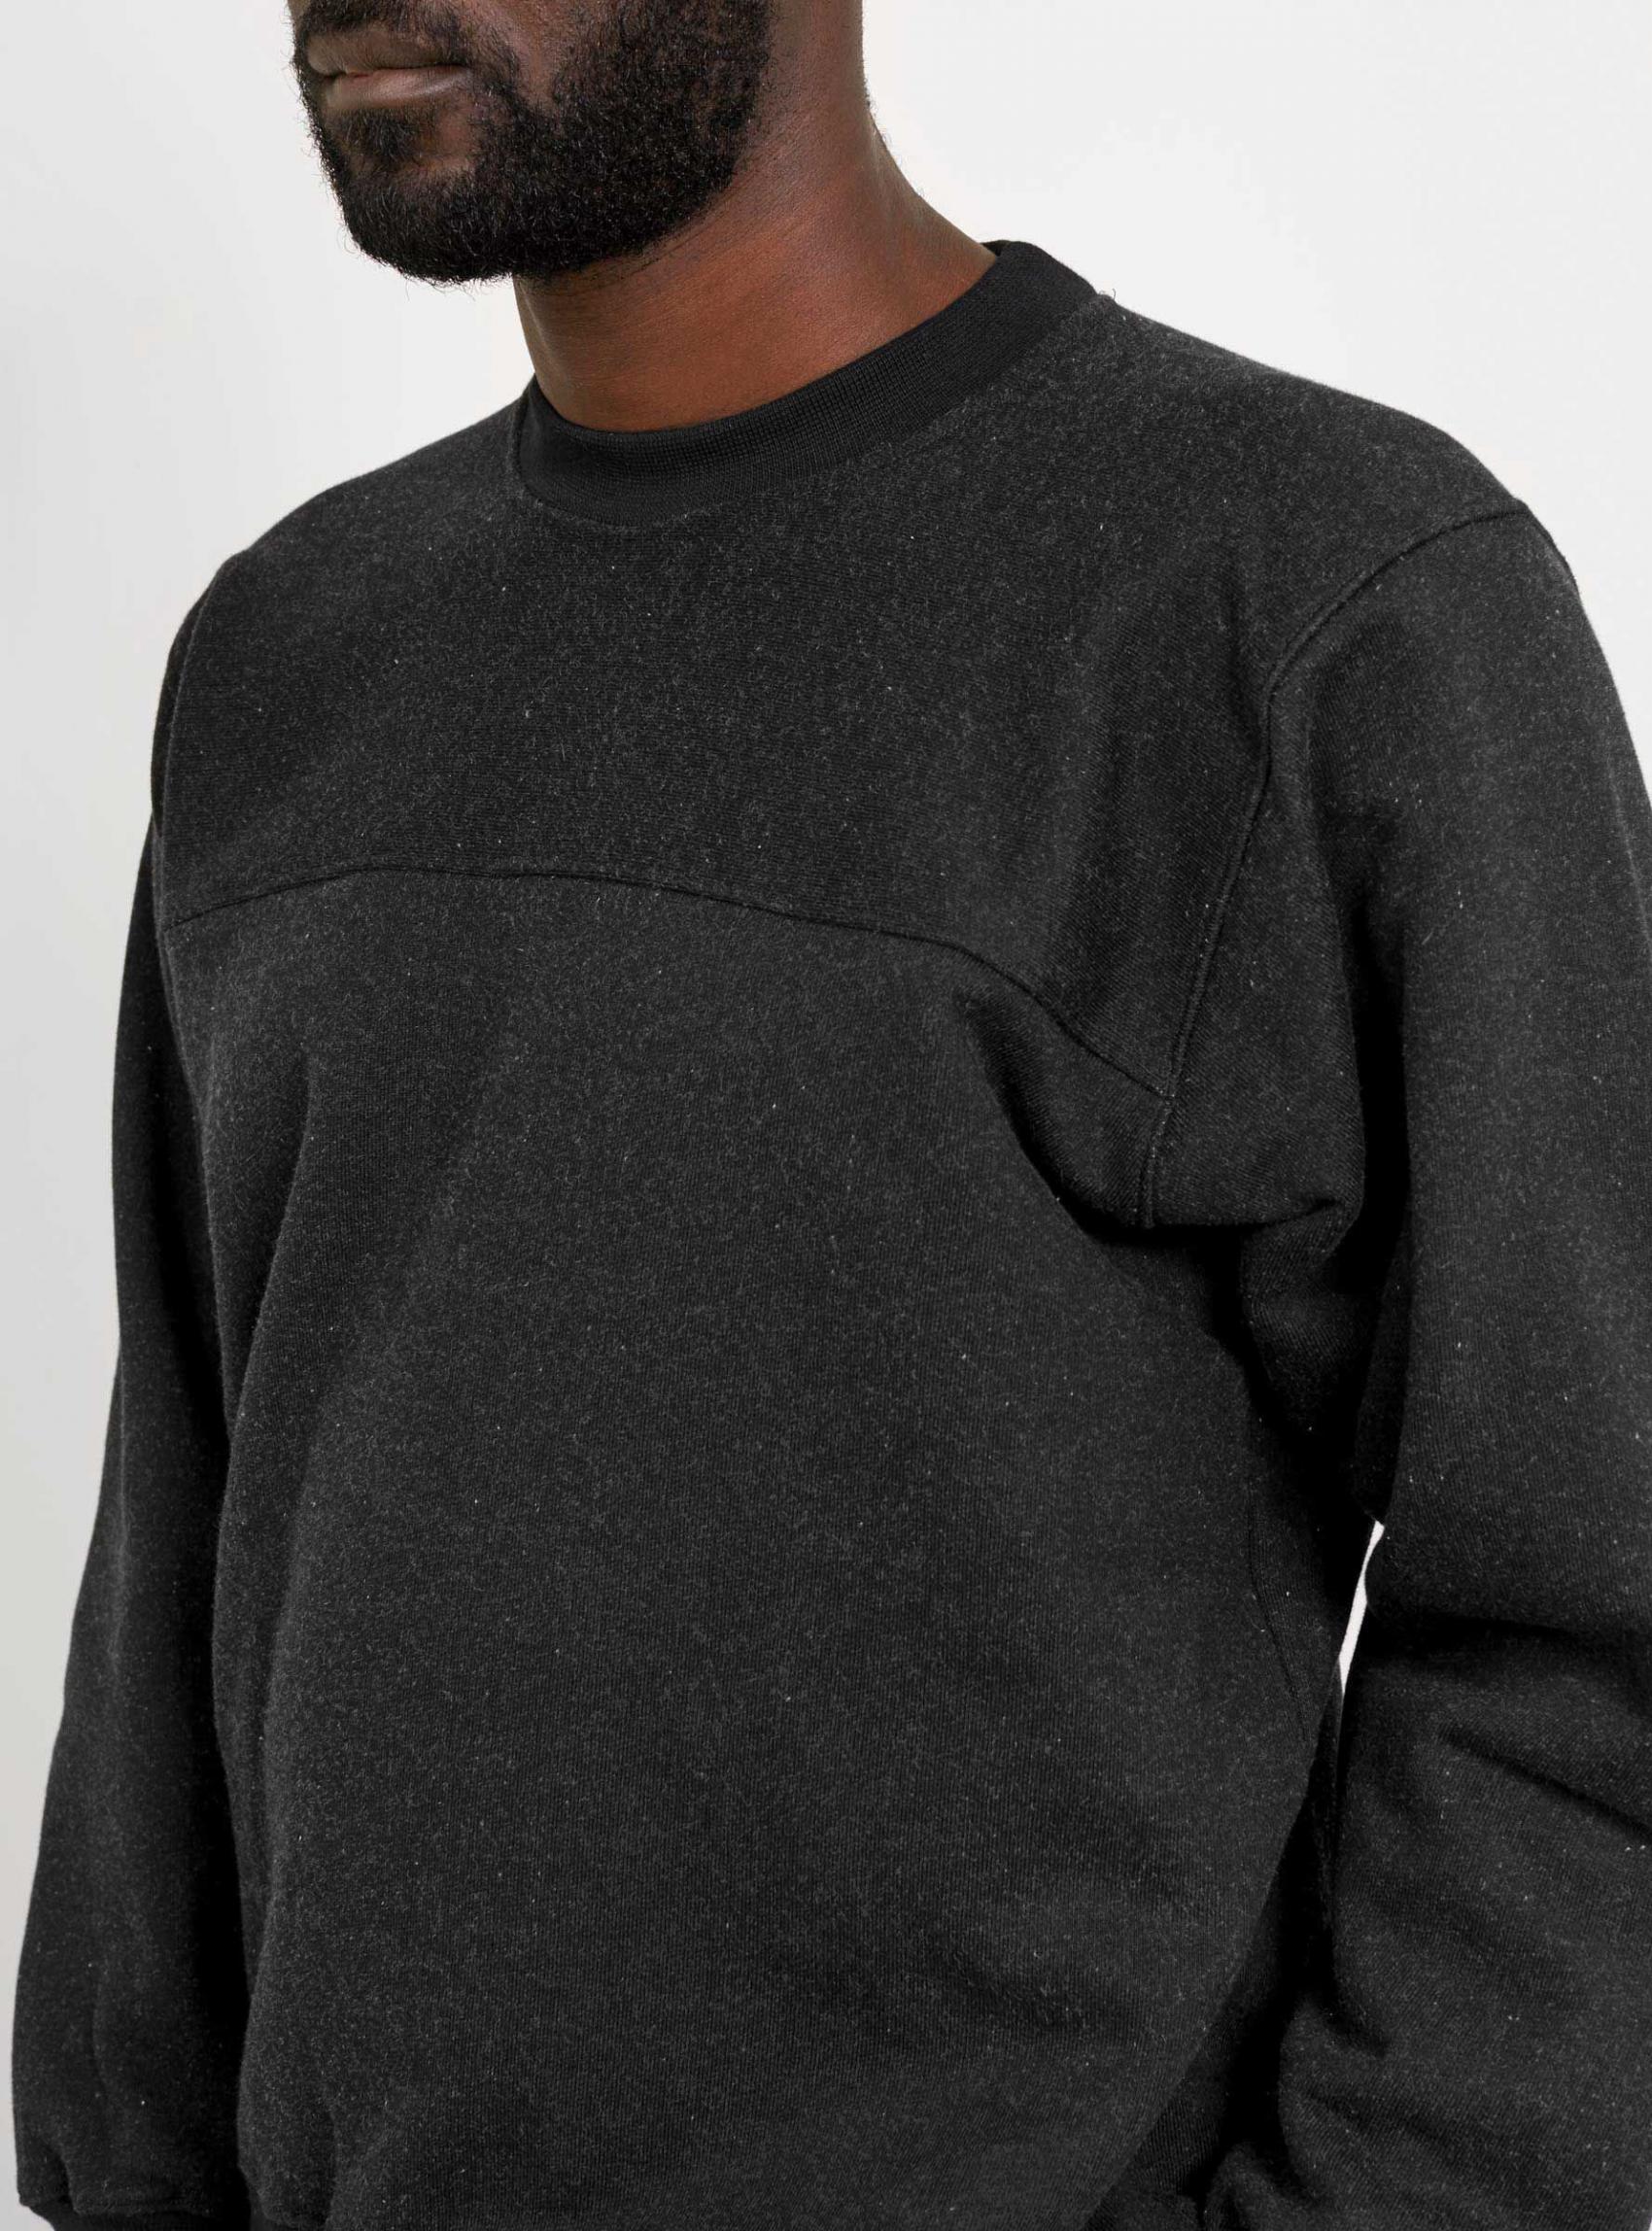 Sweatshirts | Drop Out Sports Mens Cross Sweatshirt Black Black